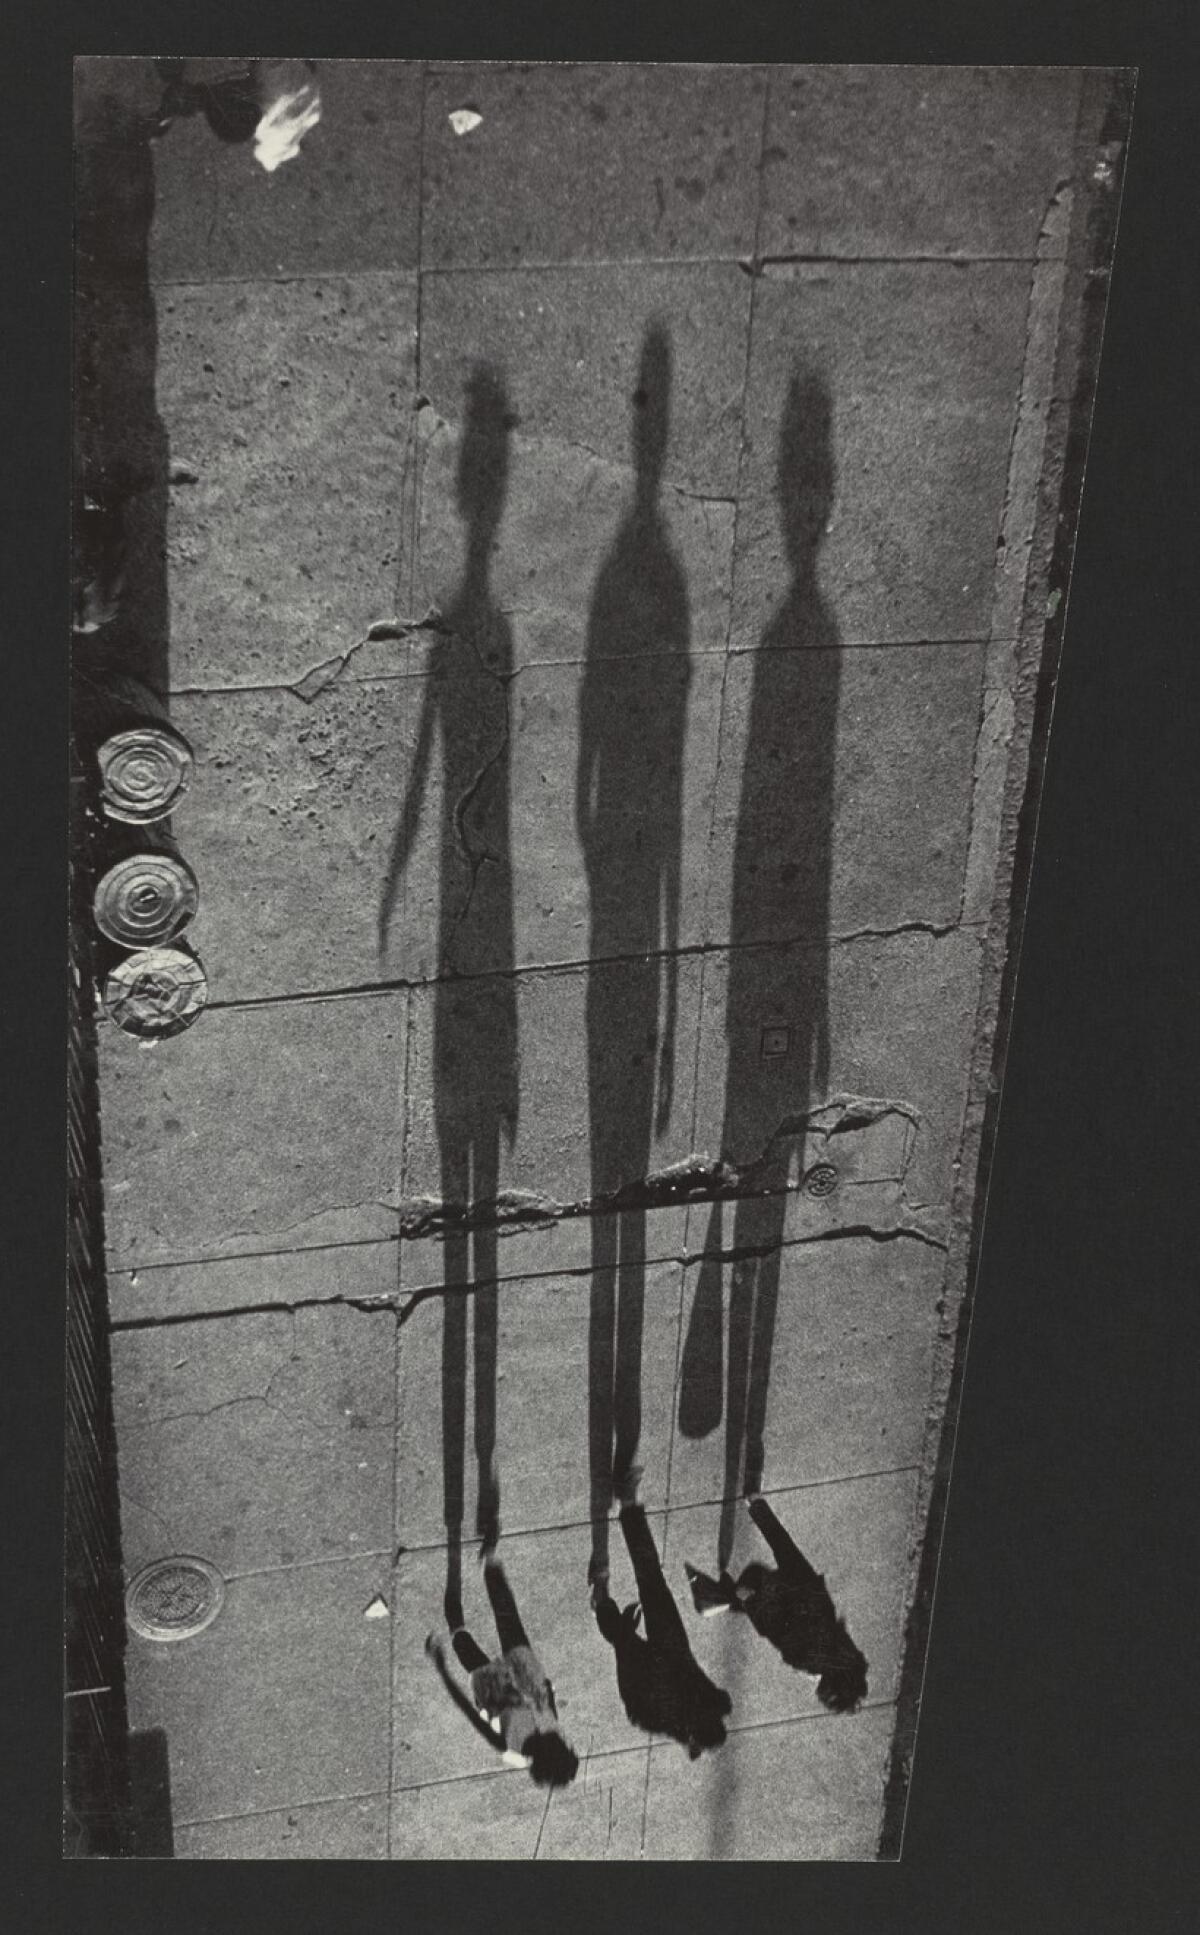 A photo of three people walking, casting long shadows